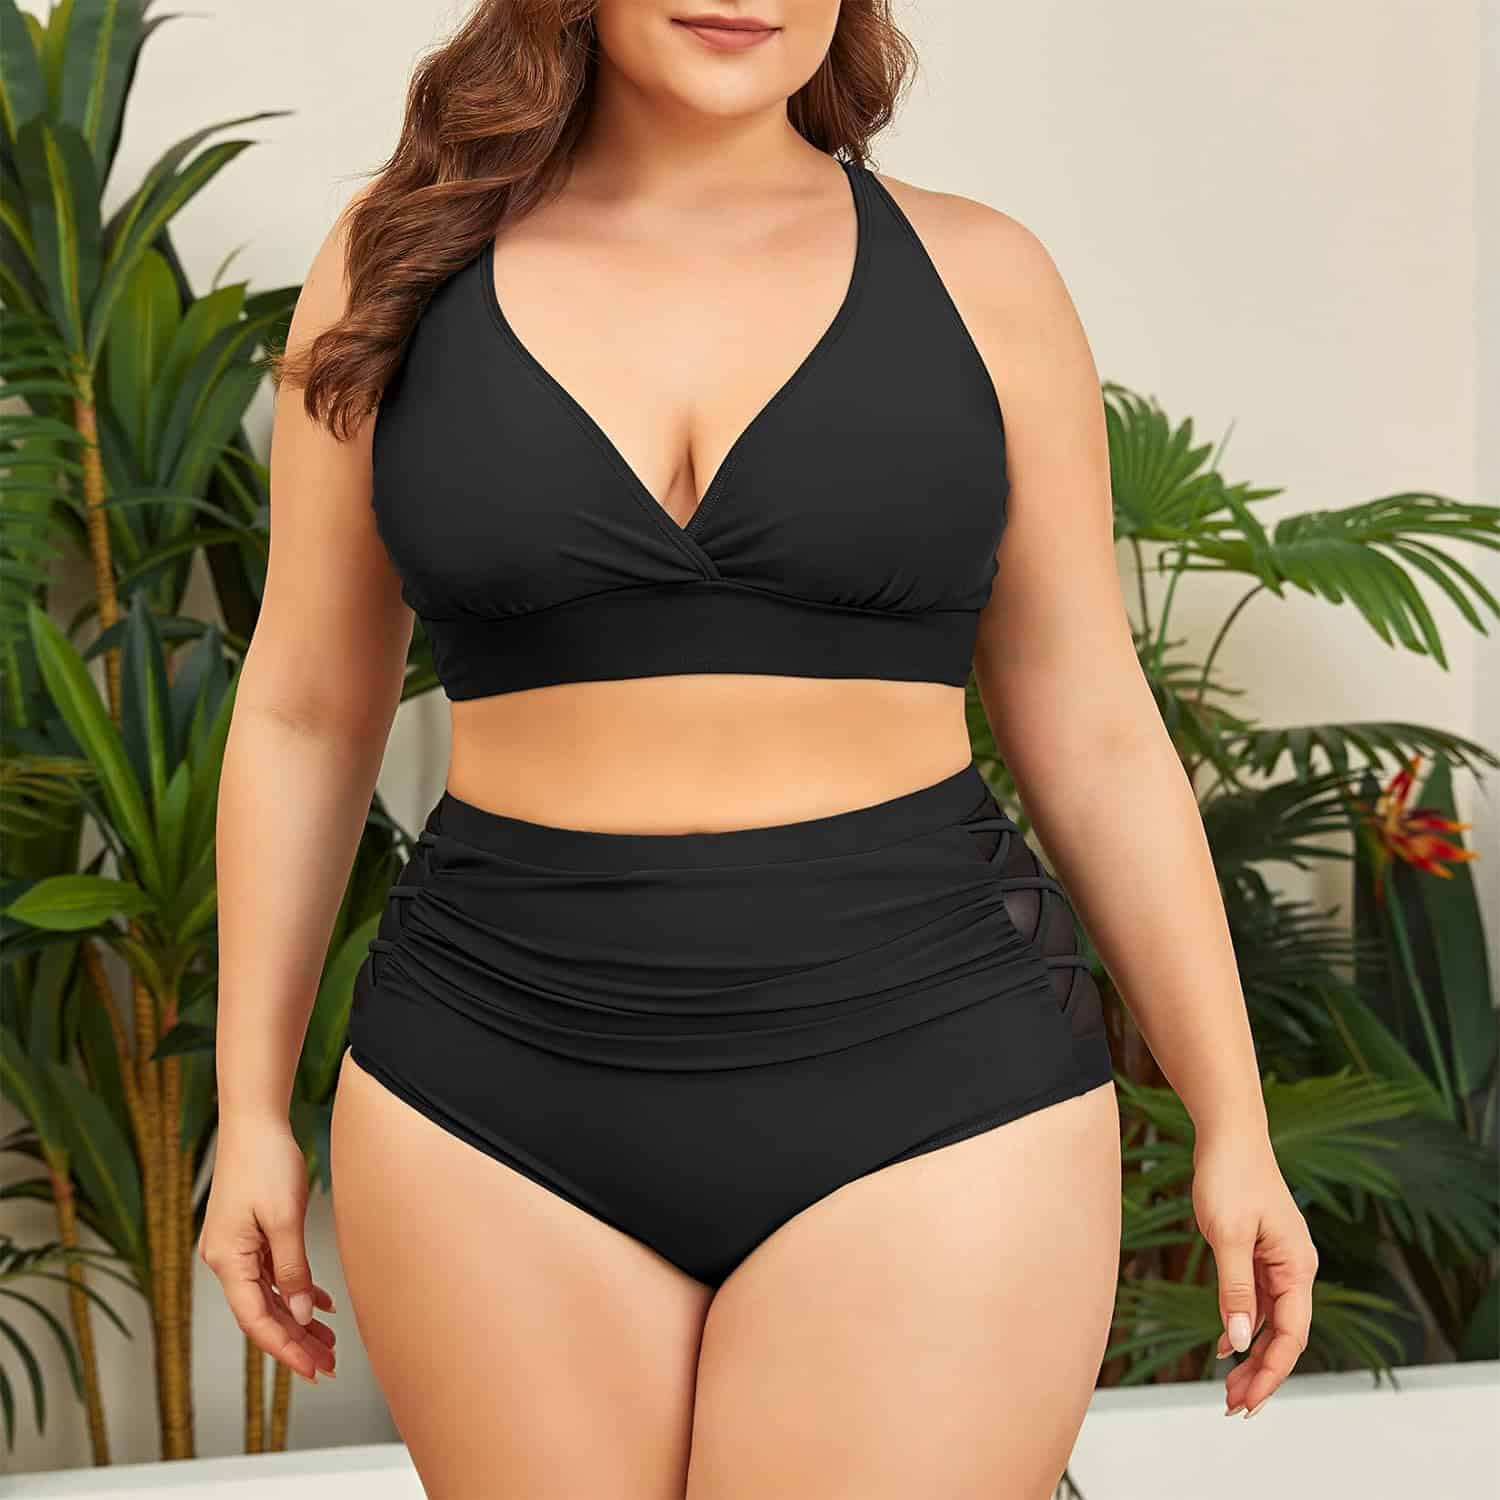 Century Star Plus Size Bikini: A Flattering Swimwear Option for Women